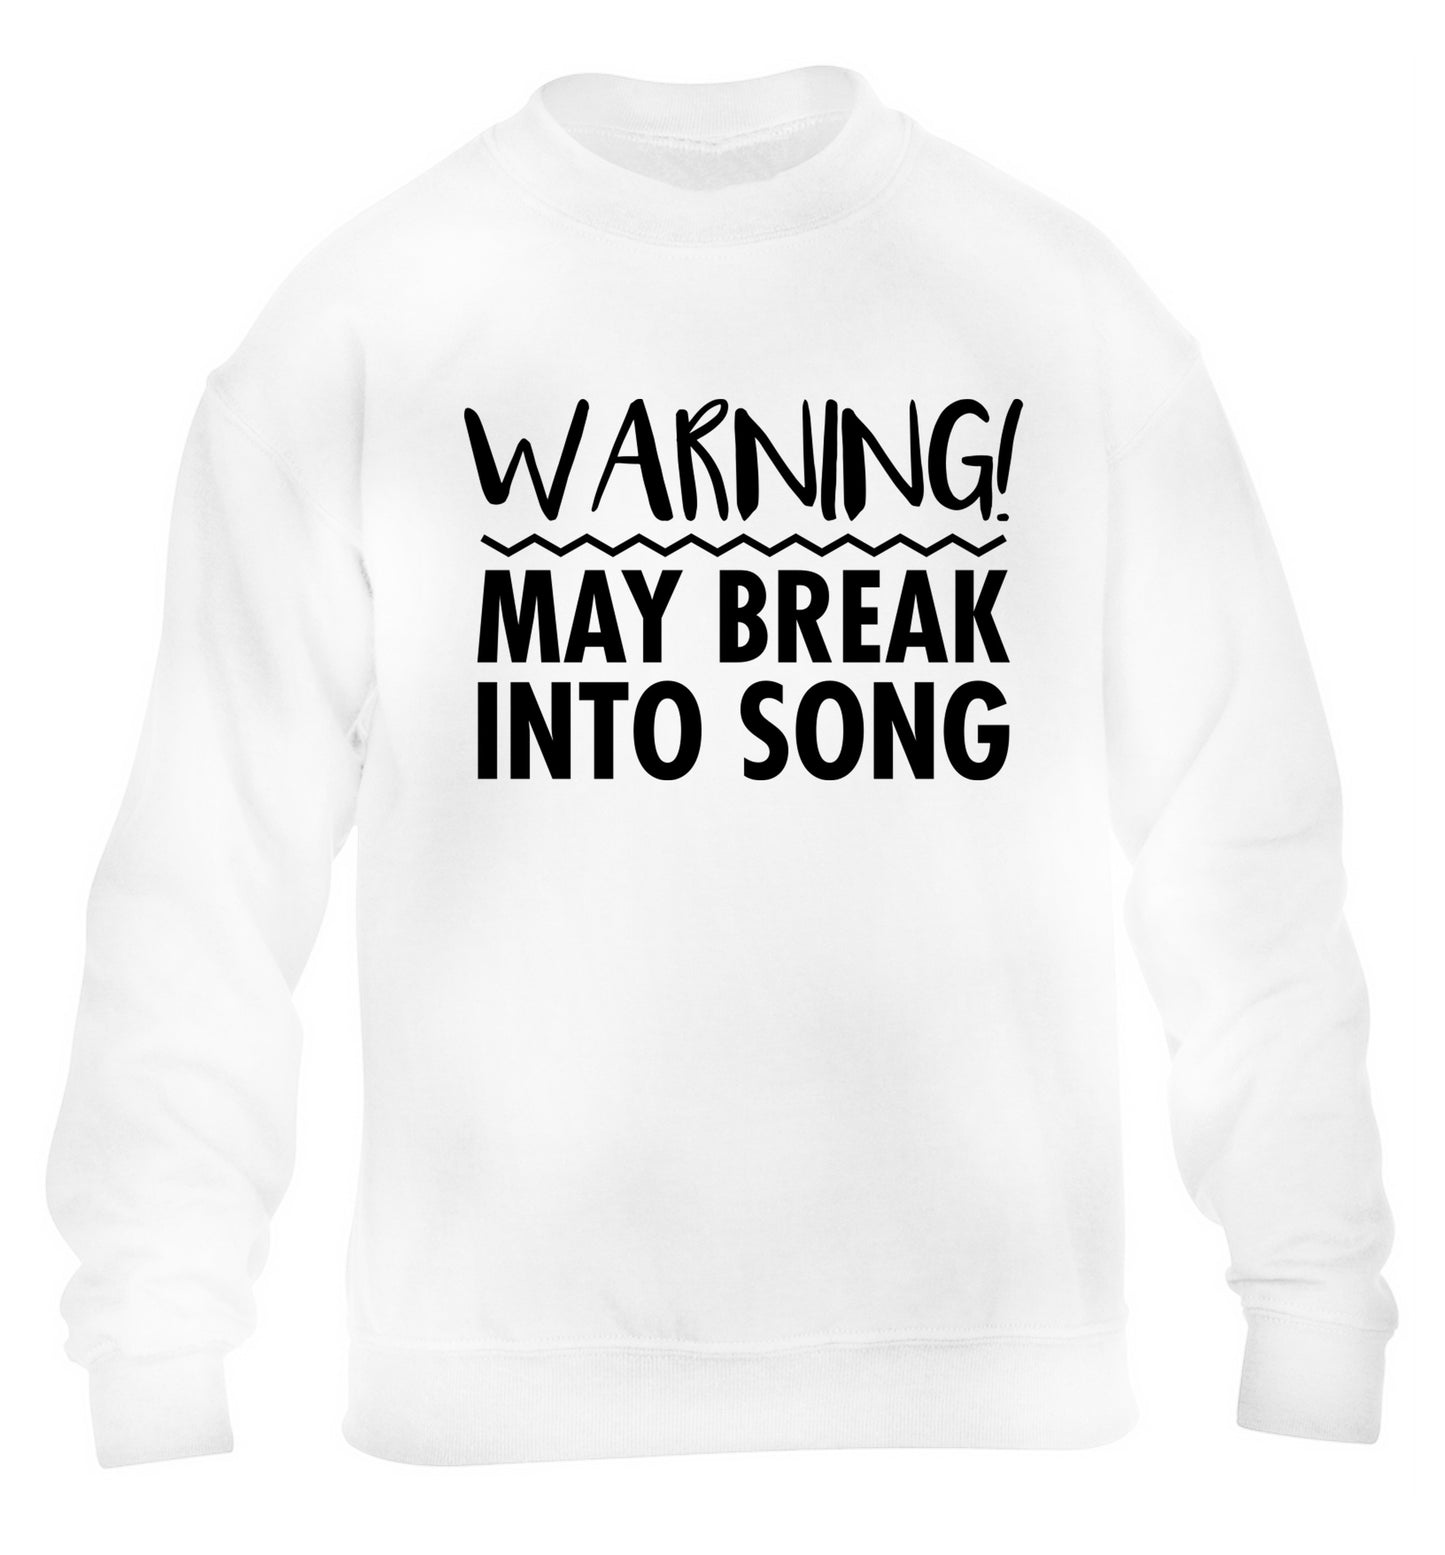 Warning may break into song children's white sweater 12-14 Years